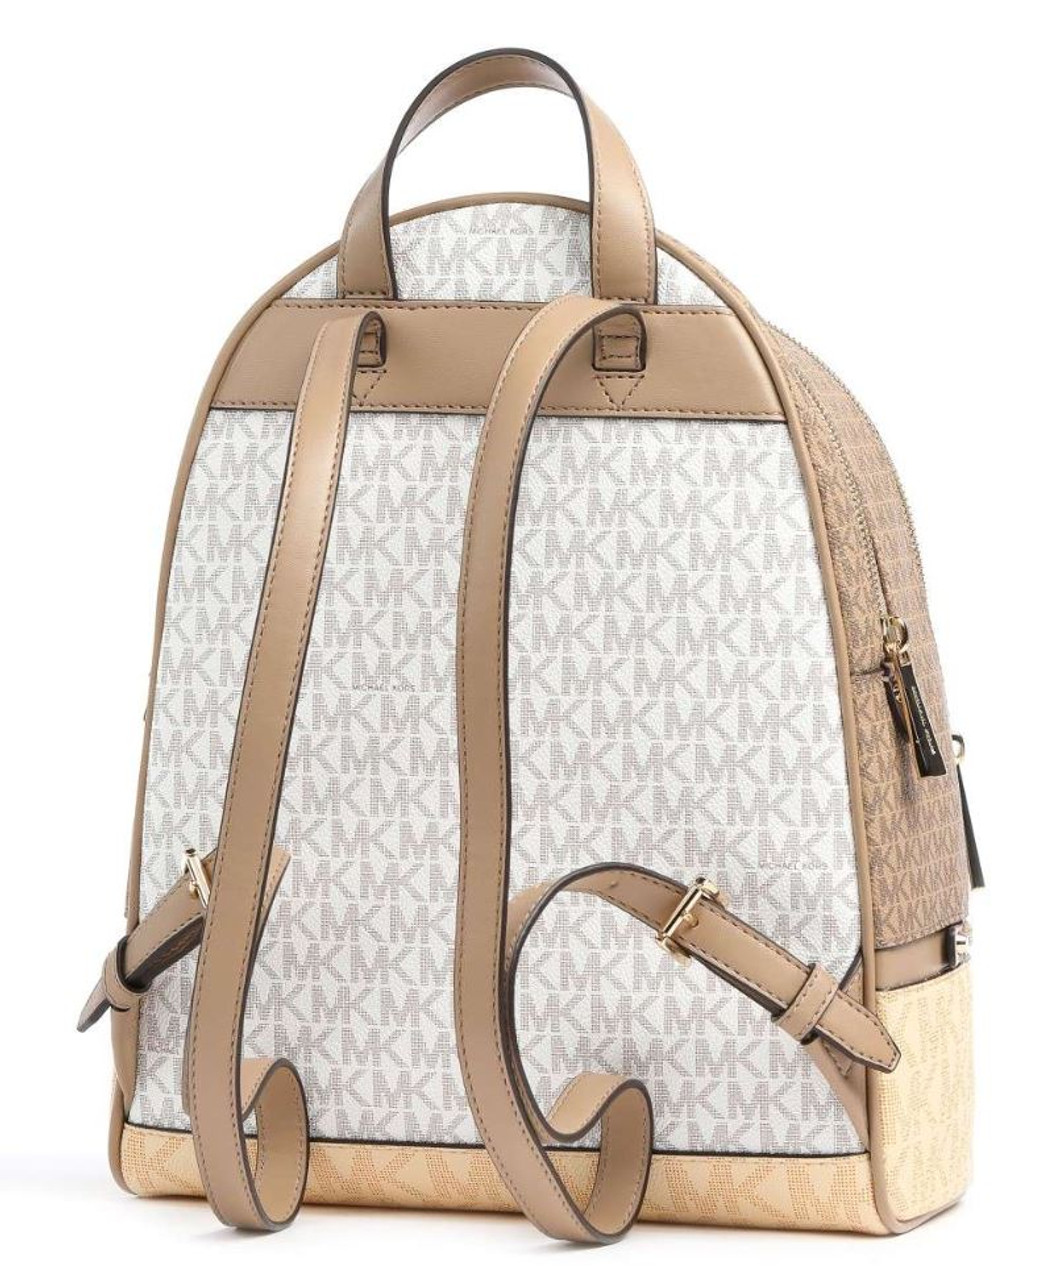 MICHAEL Michael Kors, Rhea Medium Backpack, Brown, One Size